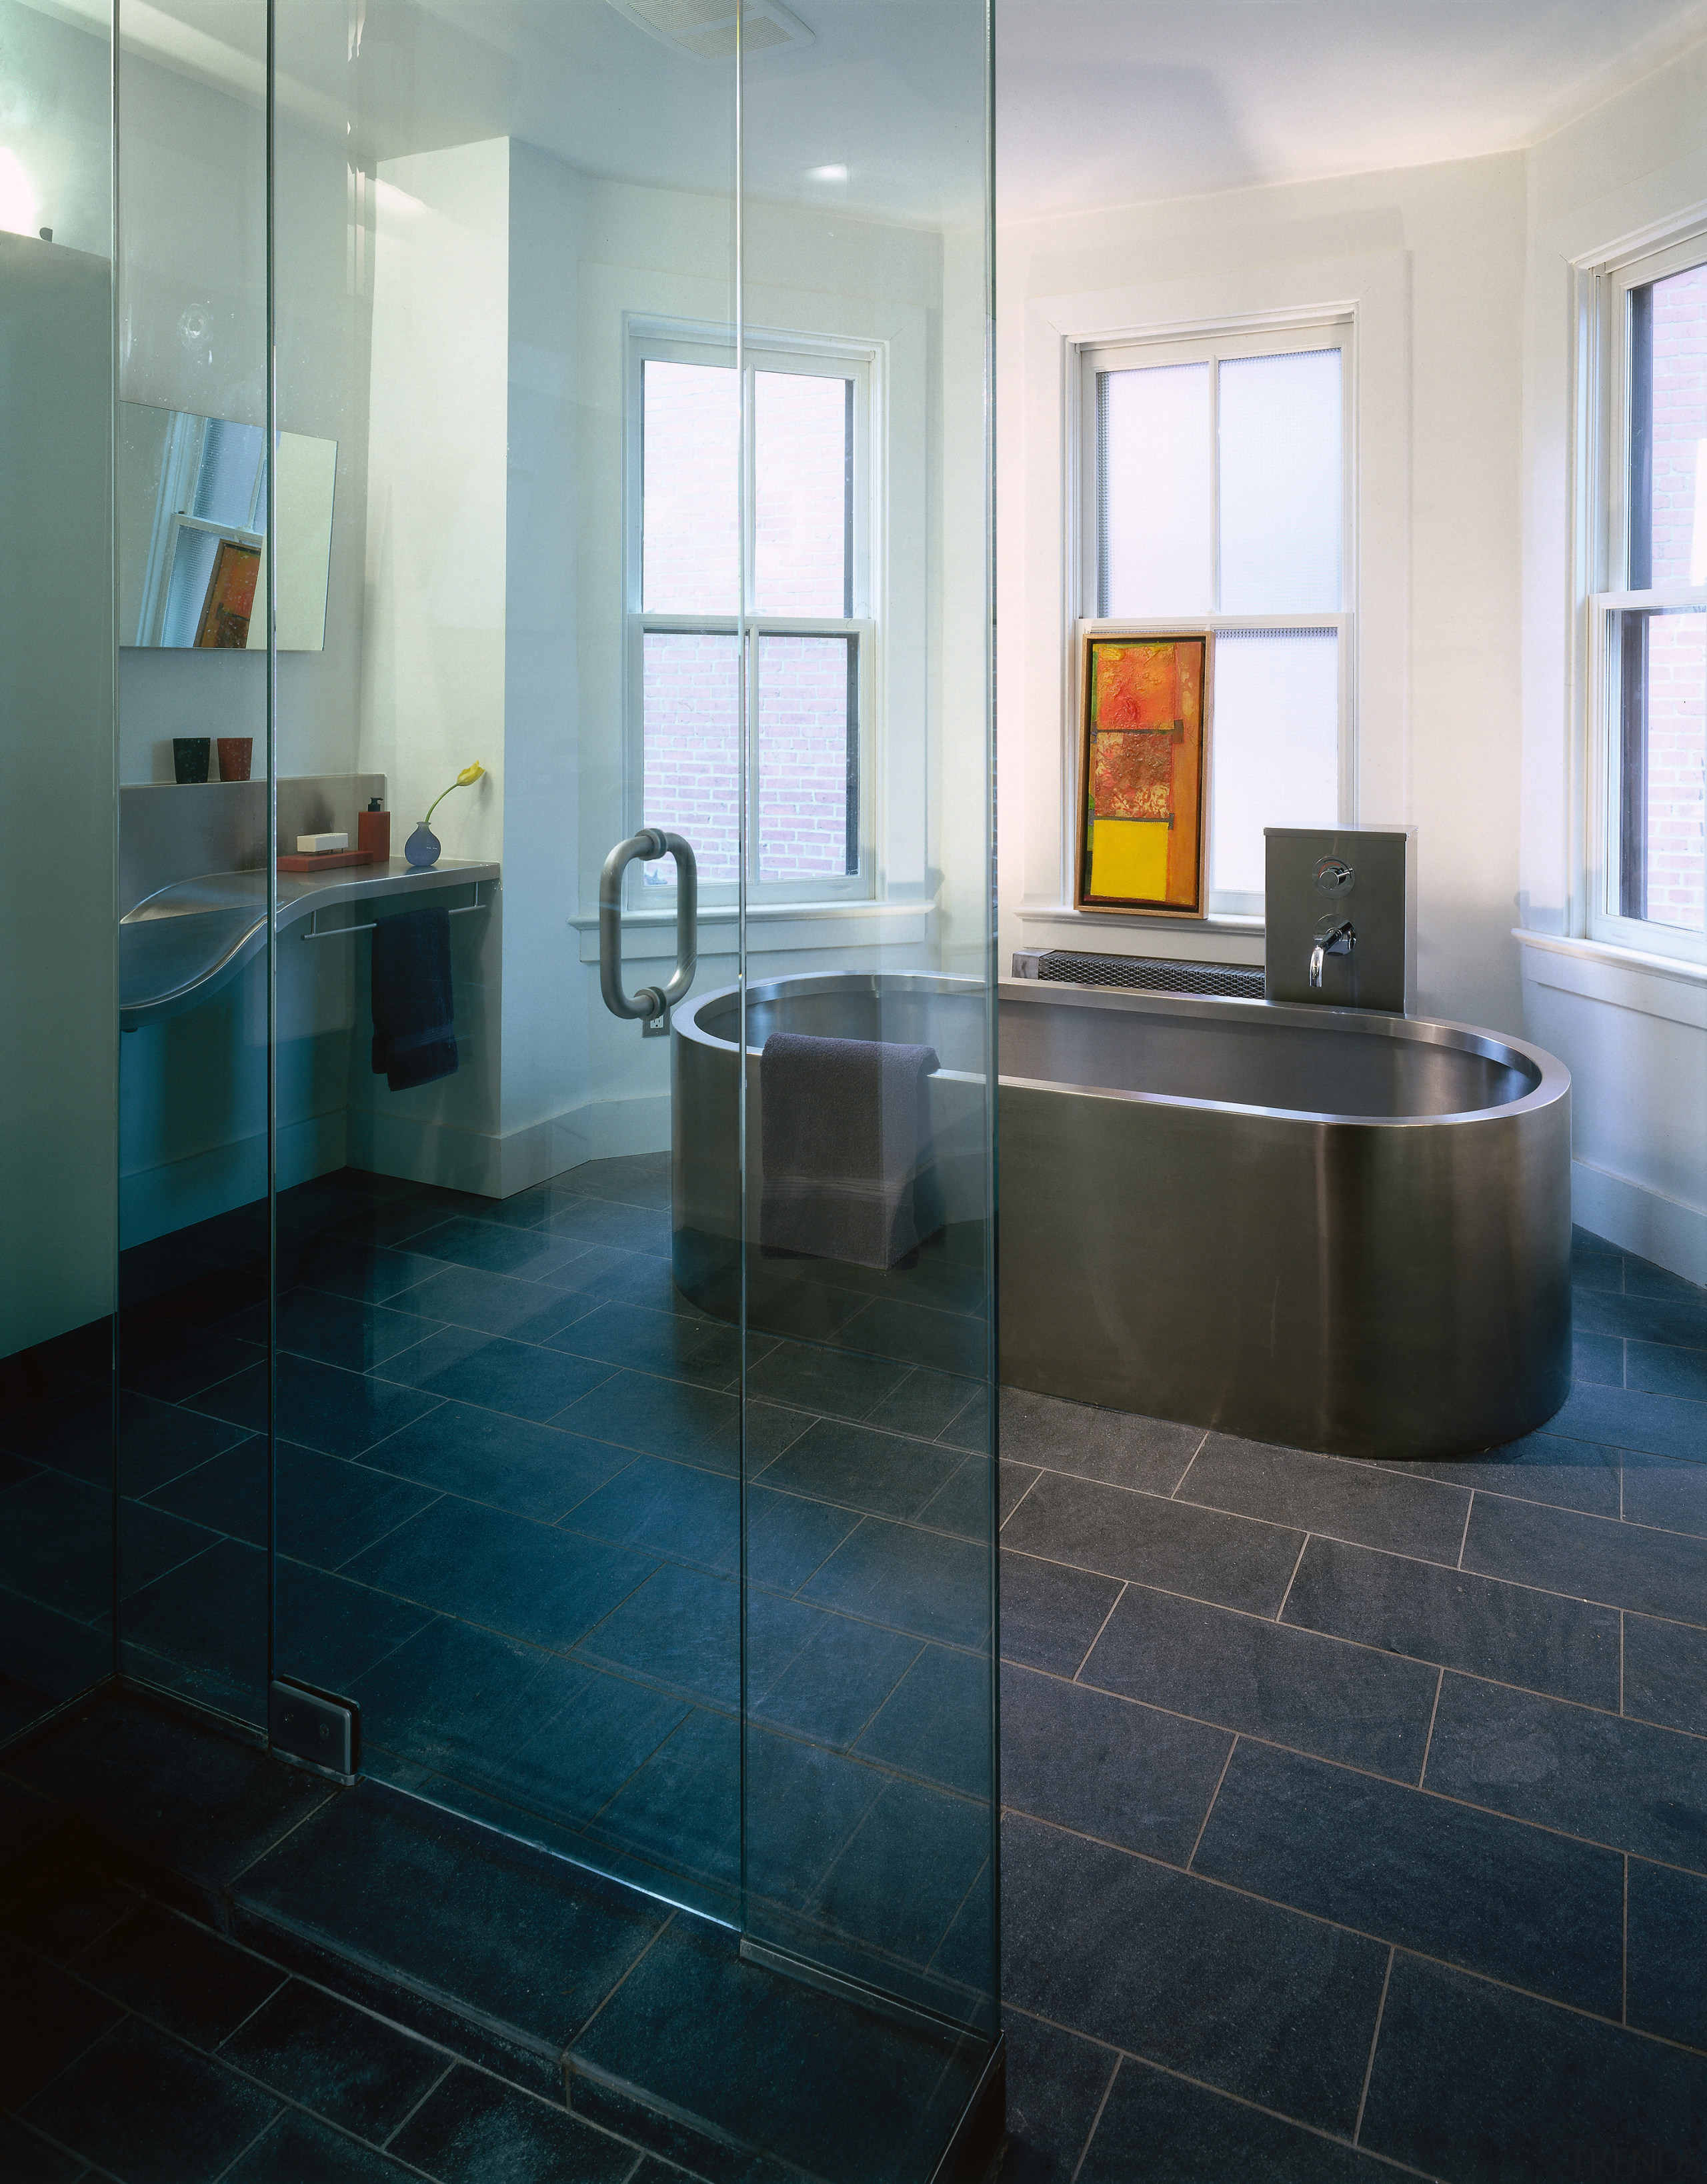 Overview of the bathroom of this home - bathroom, countertop, floor, flooring, hardwood, interior design, real estate, sink, tile, wood flooring, black, gray